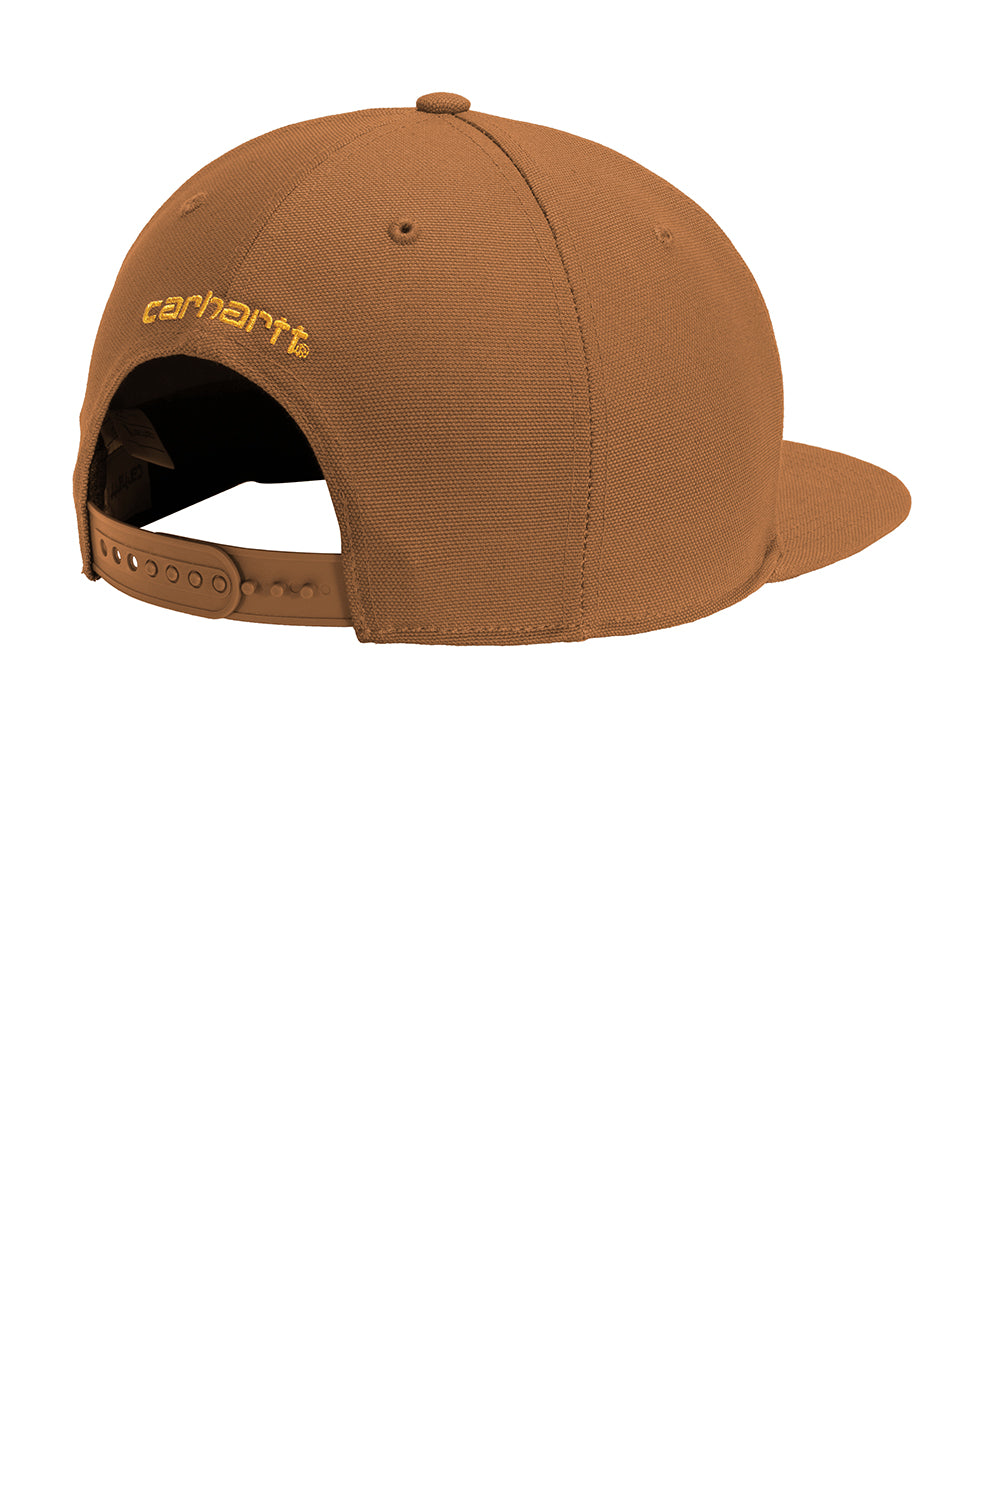 Carhartt CT101604  Ashland FastDry Moisture Wicking Adjustable Hat Carhartt Brown Flat Back